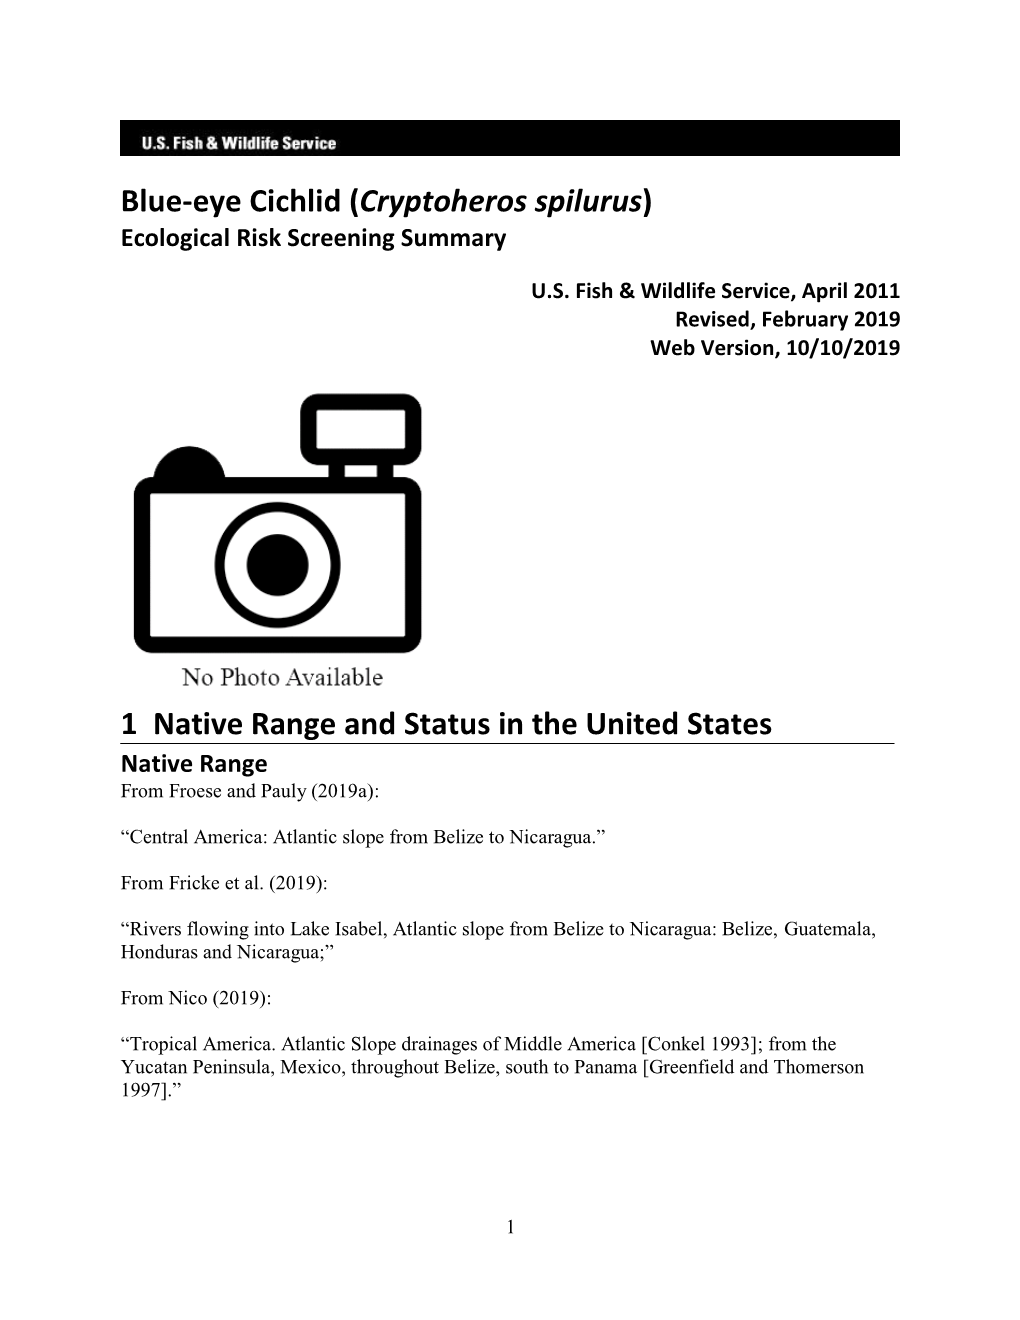 Blue-Eye Cichlid (Cryptoheros Spilurus) Ecological Risk Screening Summary